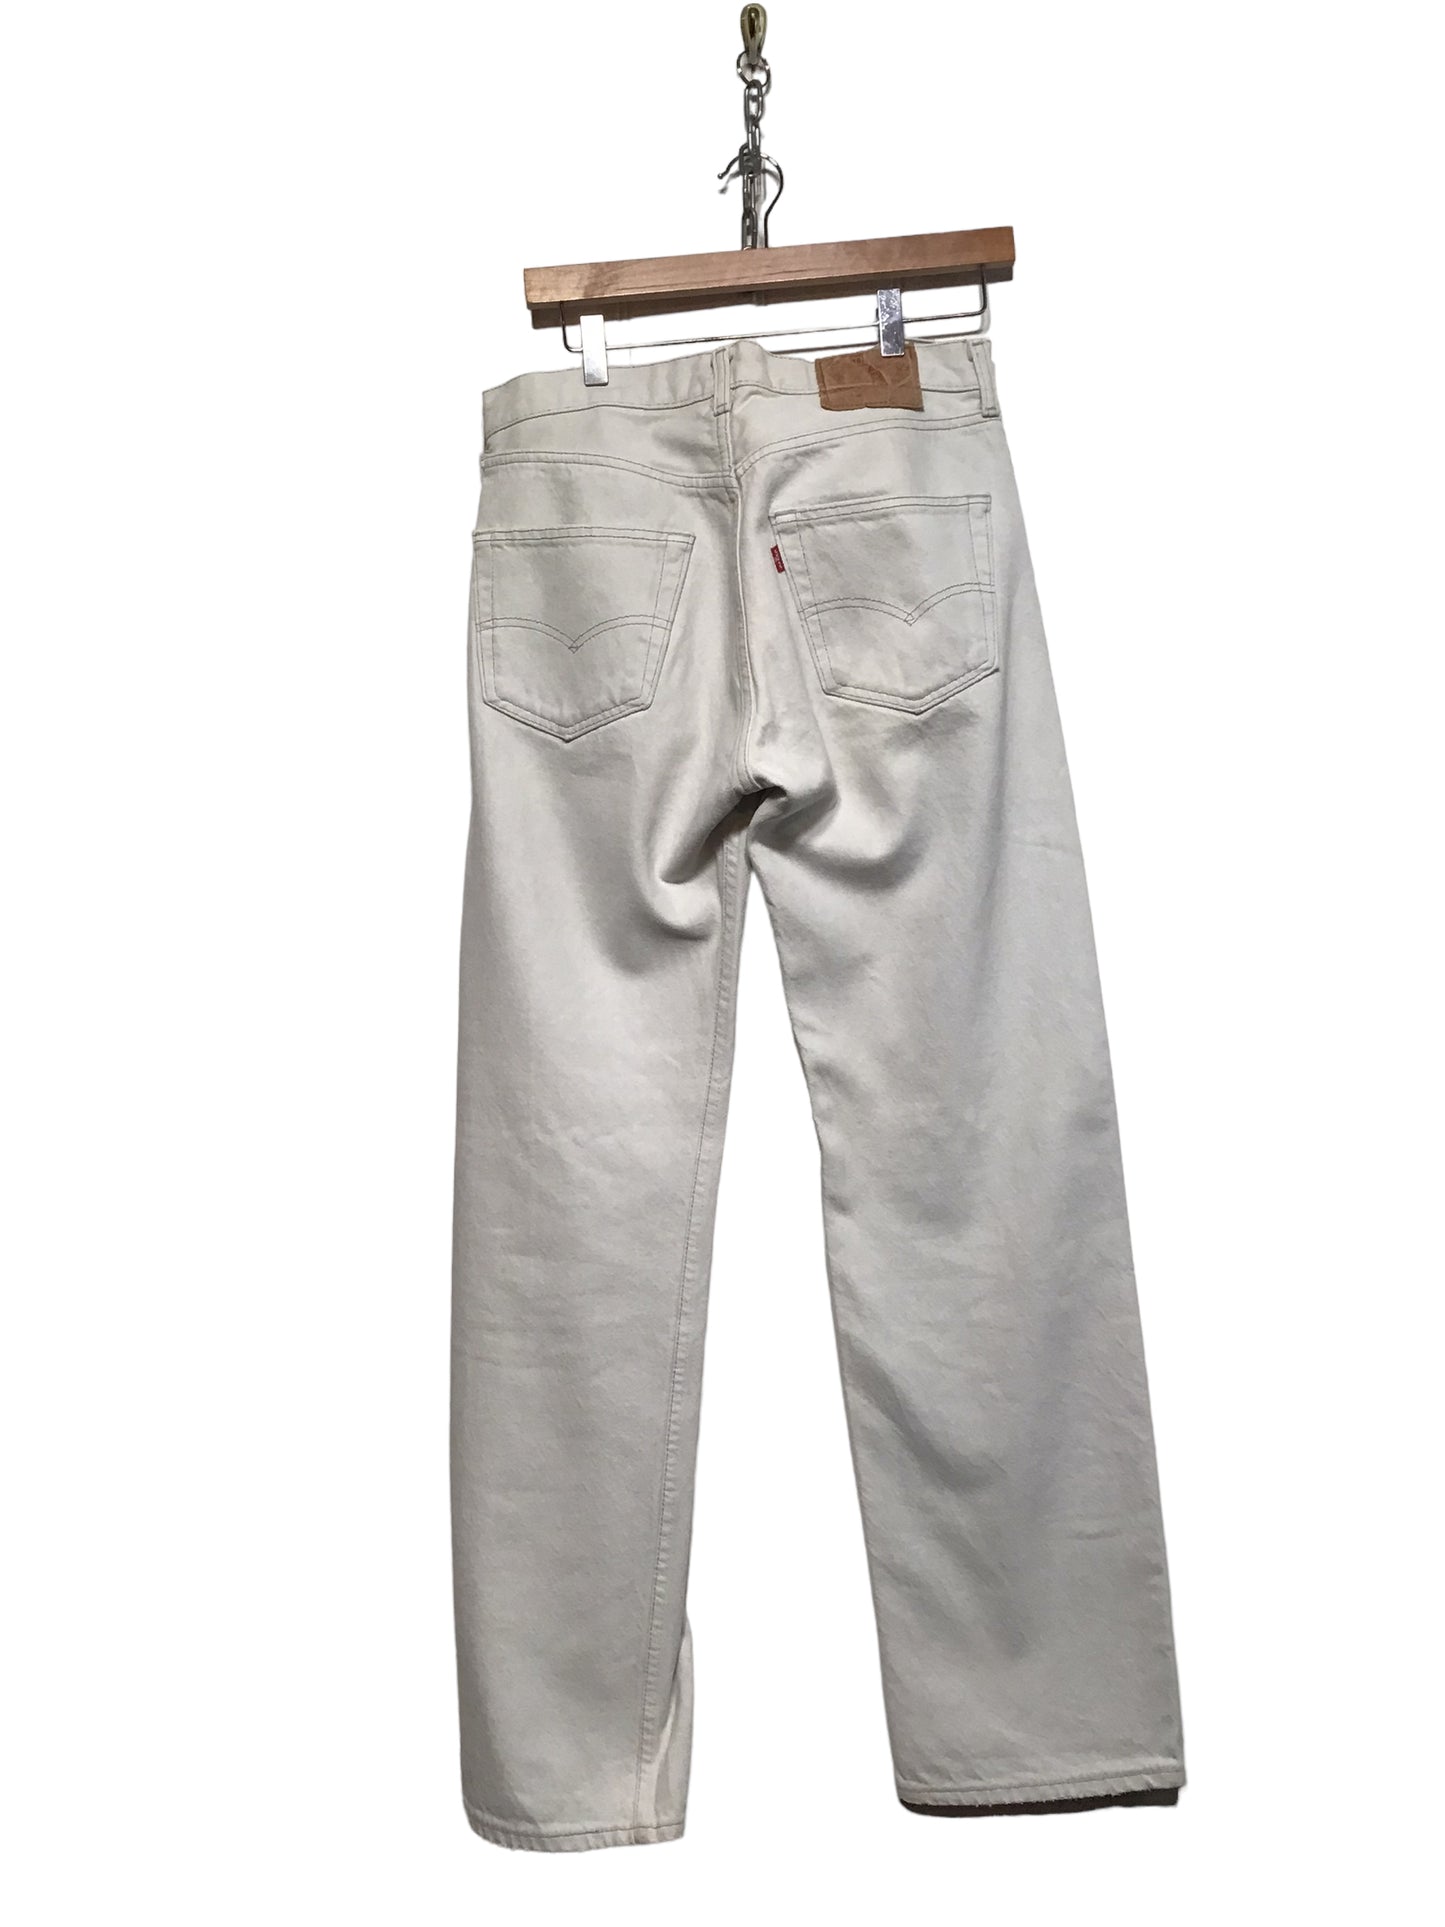 Levi’s Off-white Jeans (32x32)